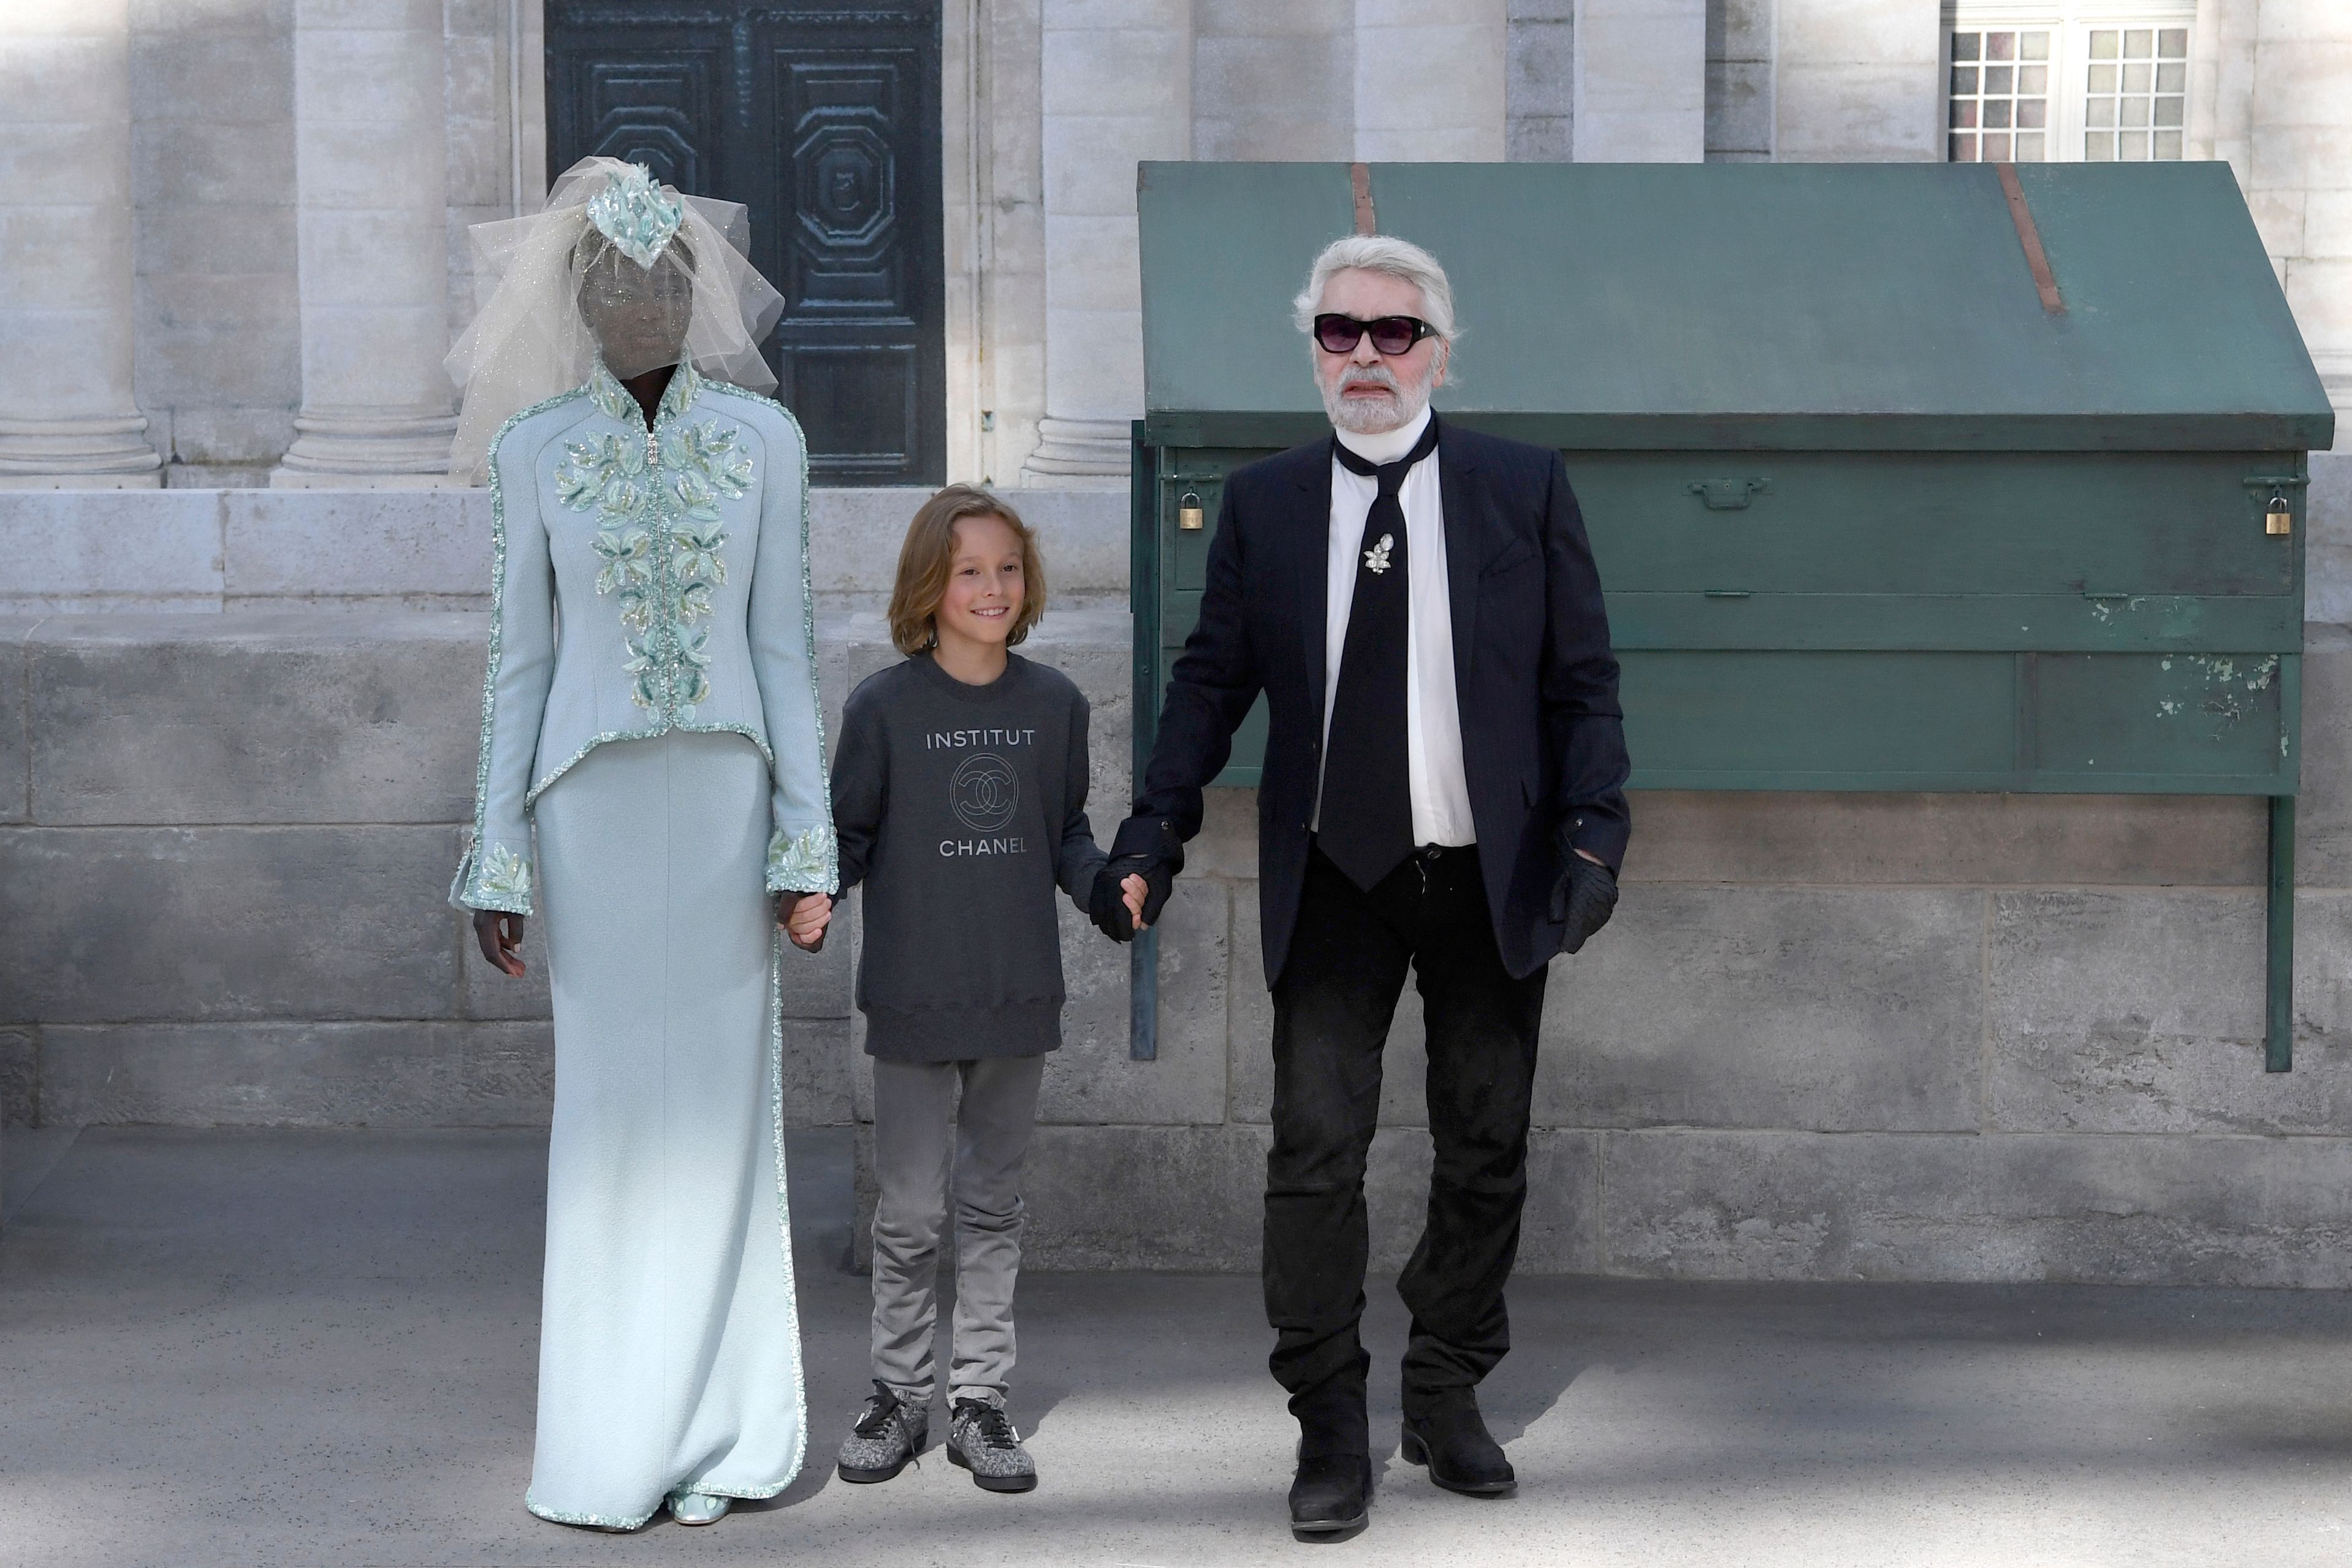 Karl Lagerfeld, Chanel creative director, dead